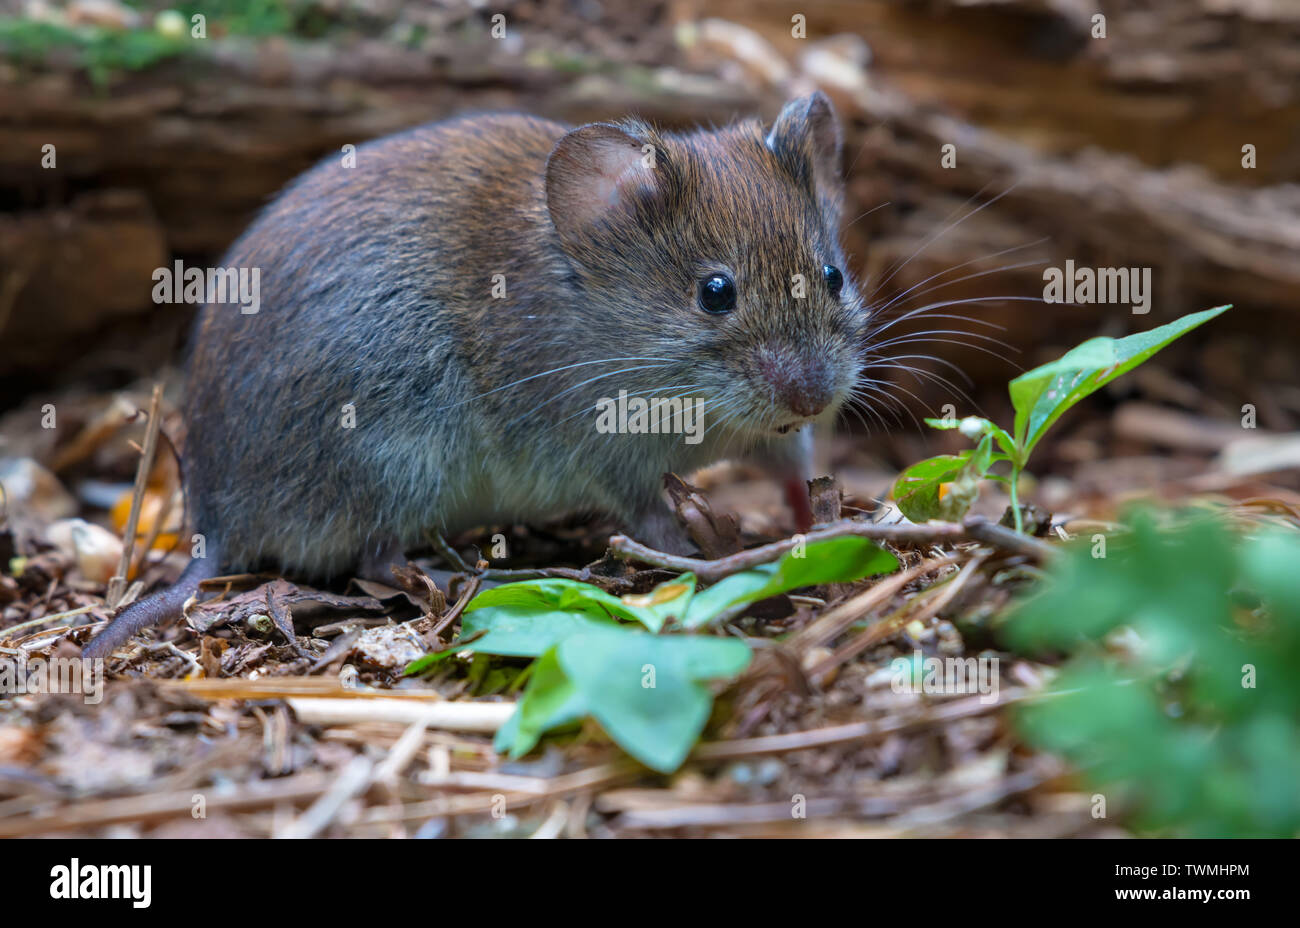 Bank vole feeding on forest leafy floor Stock Photo